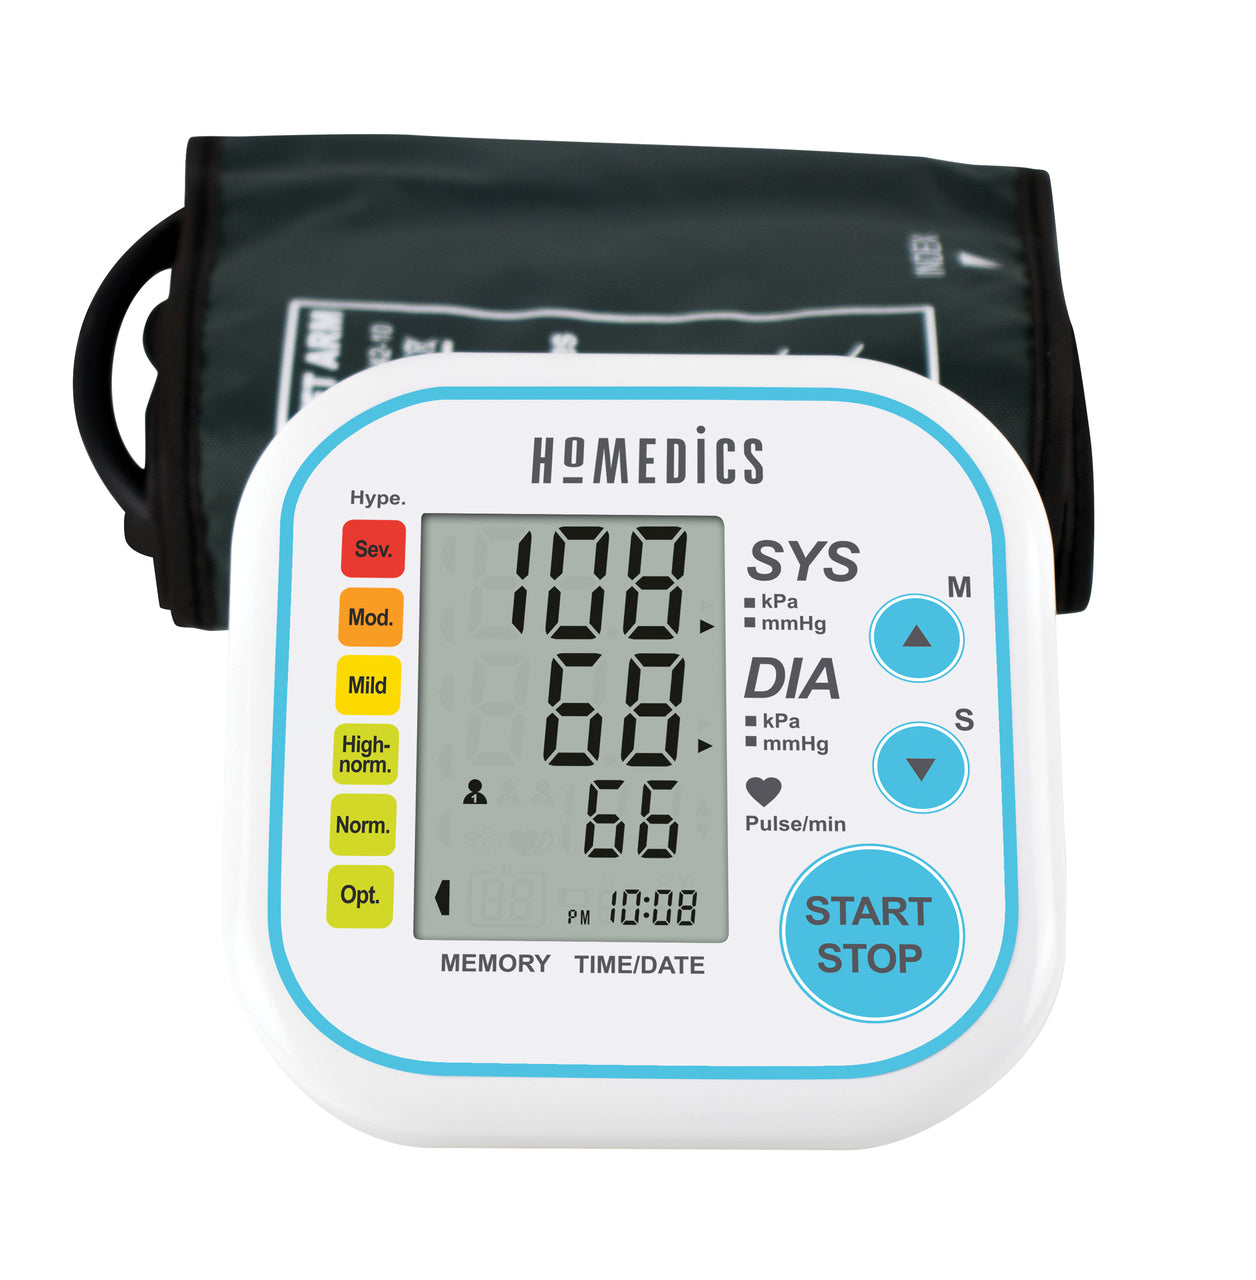 HoMedics BPA-3020 Auto Arm Blood Pressure Monitor